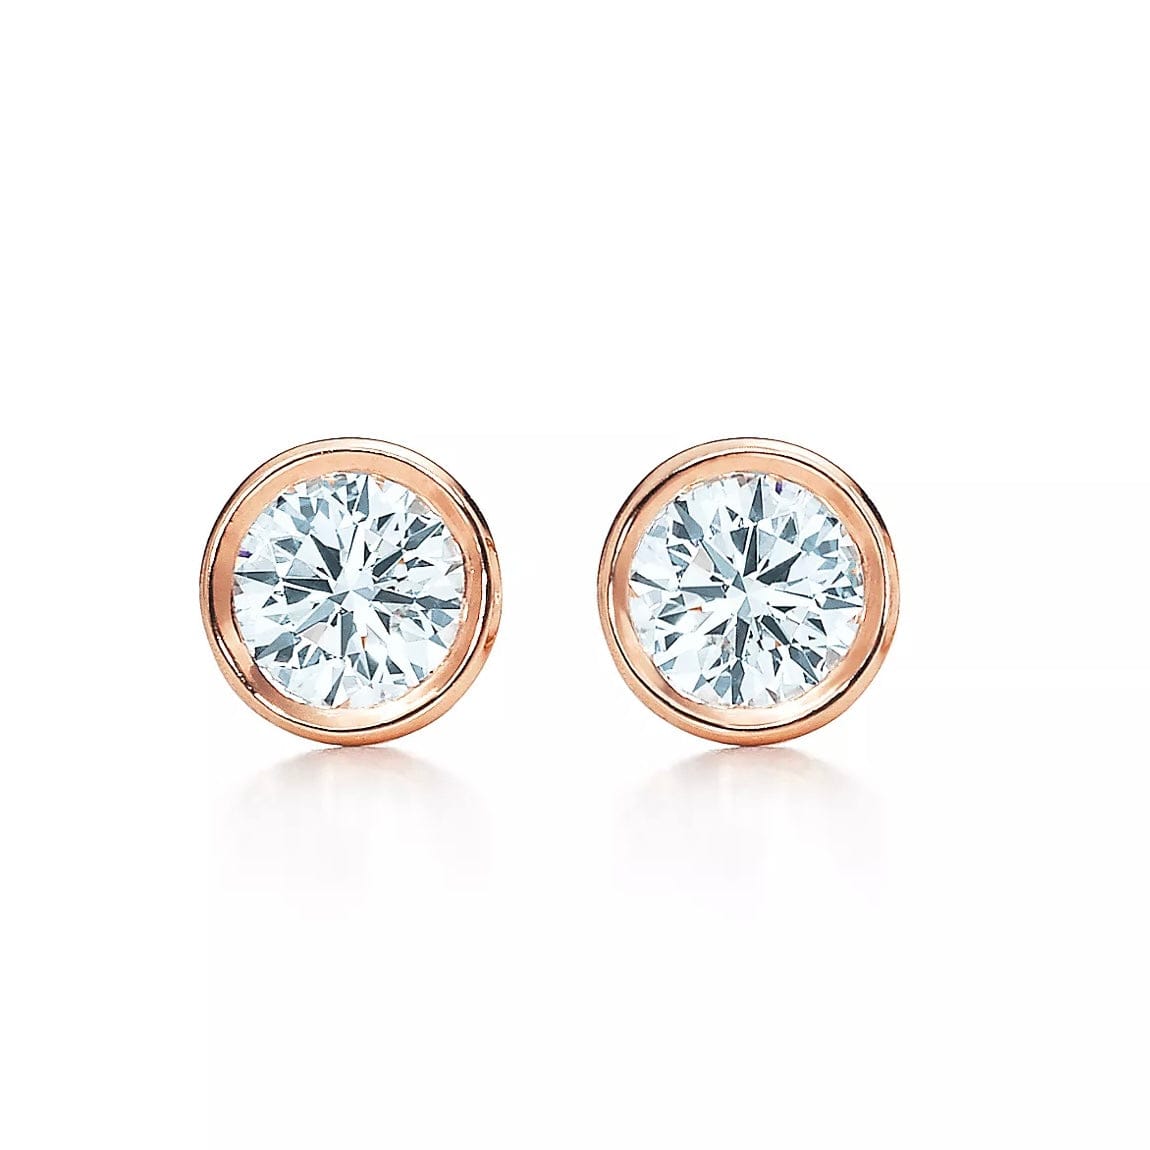 Bezel Stud Earrings in Rose Gold - Small - أقراط - Luxury Diamond Jewelry shop Dubai - SABA DIAMONDS